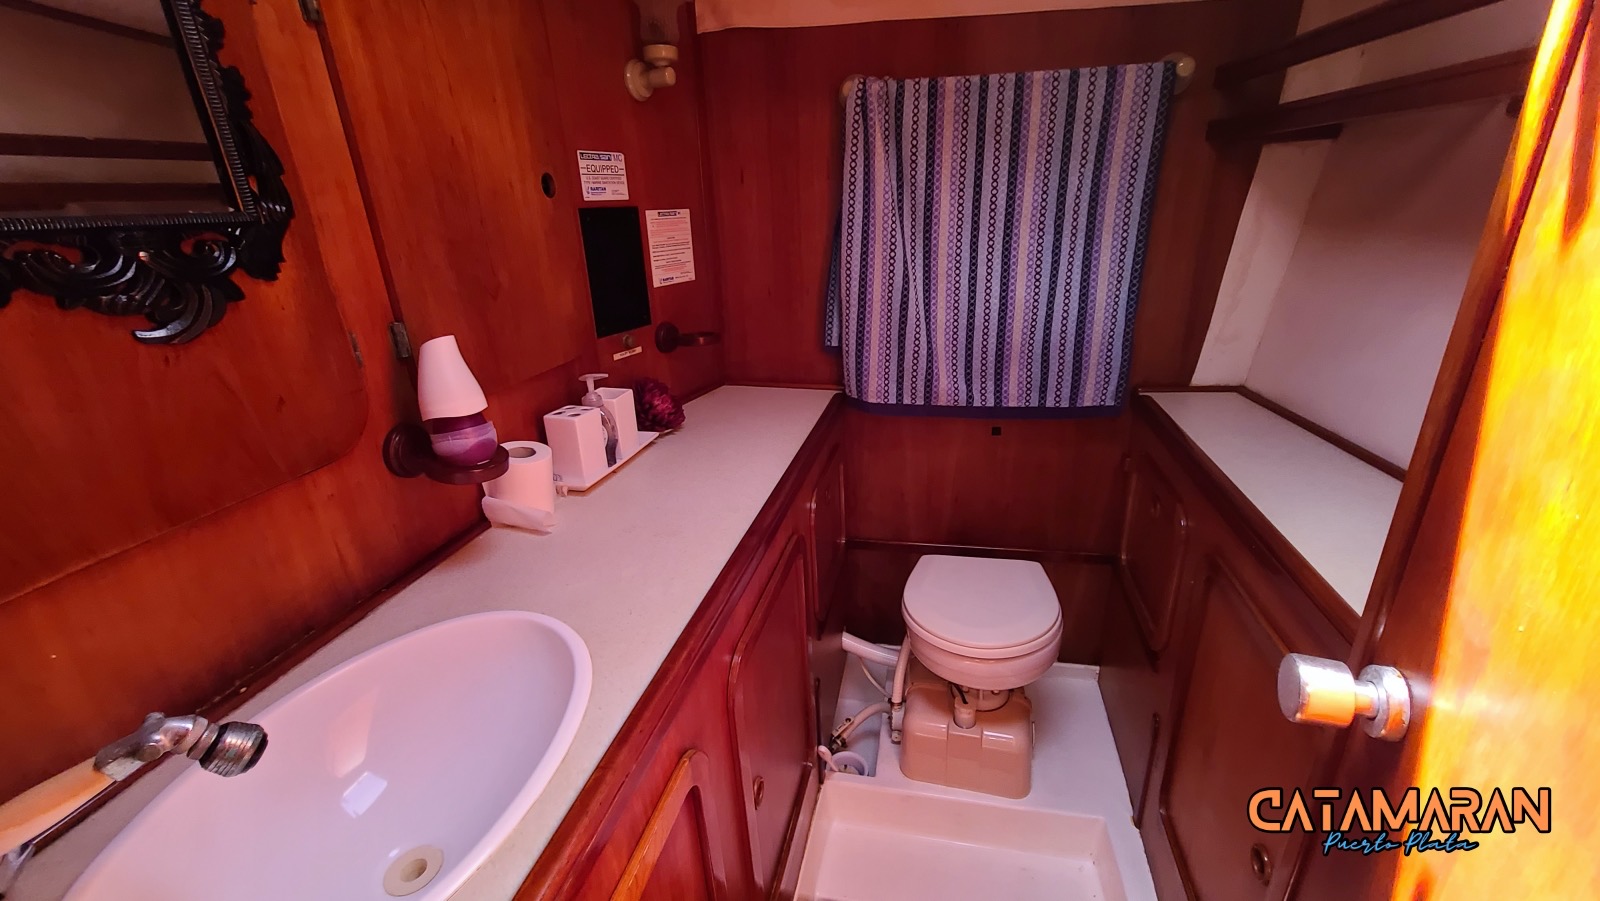 A bathroom inside the catamaran